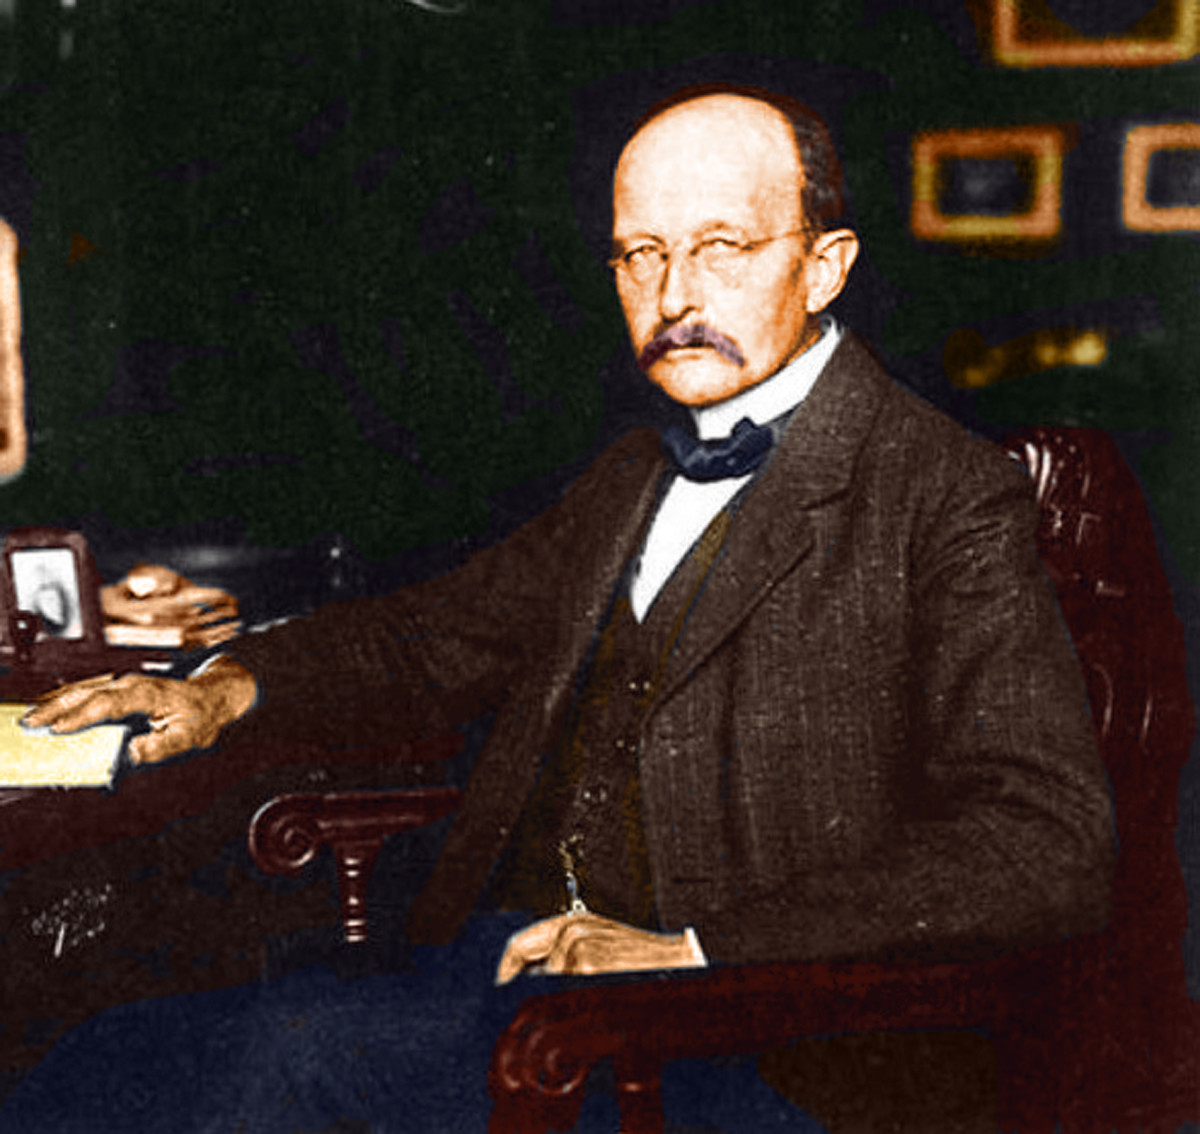 Max Planck circa 1919 sitting at his desk.